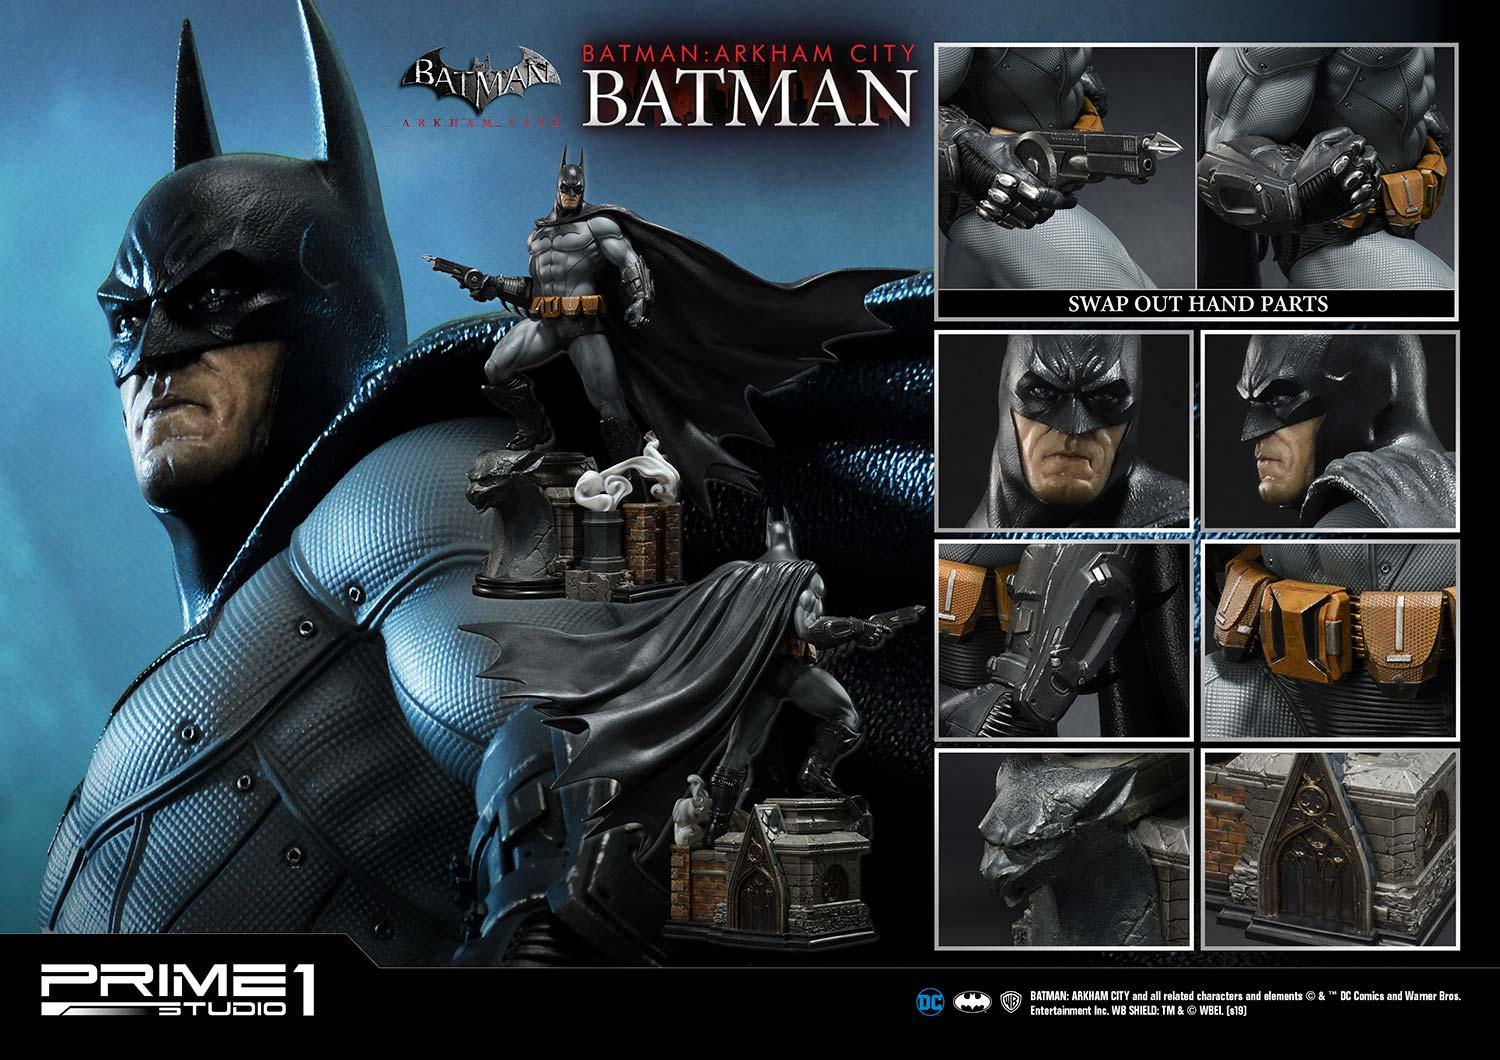 Prime 1 Studio Batman. Prime 1 Studio Batman Arkham. Статуя Бэтмена. Batman Arkham City Rocksteady Studios.